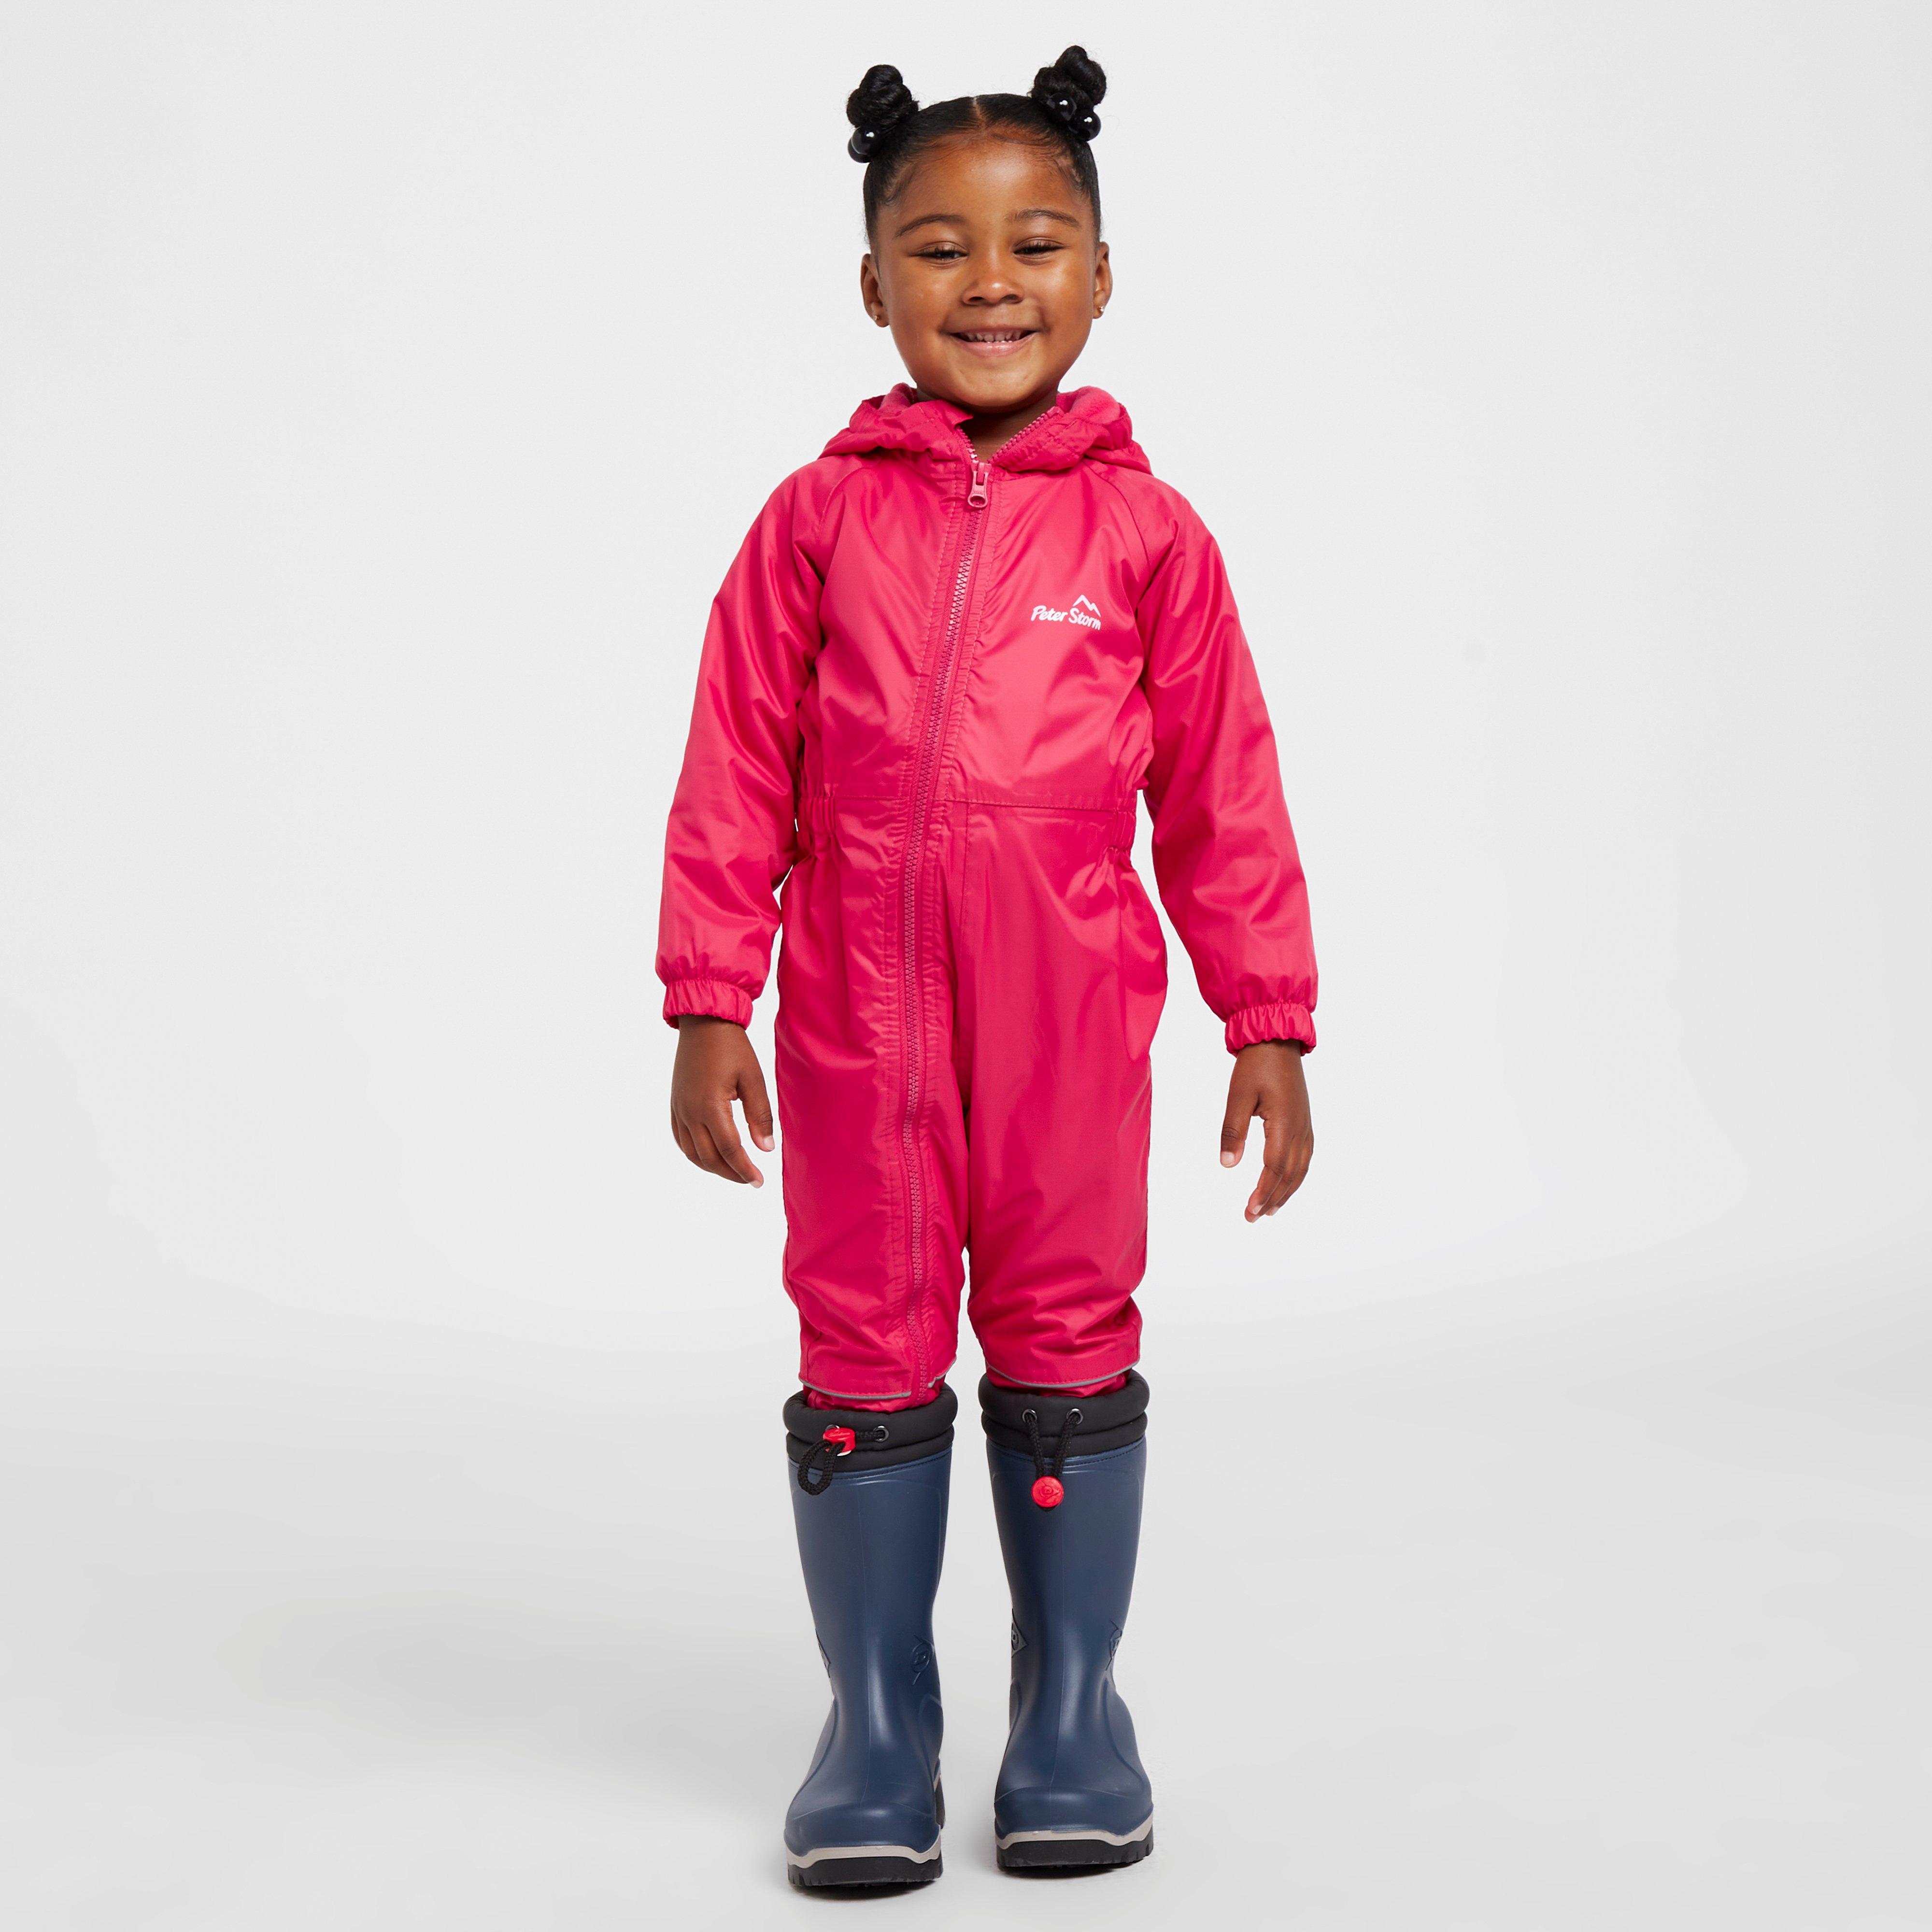 Peter Storm Infants Fleece Lined Waterproof Suit - Pink/mpi  Pink/mpi